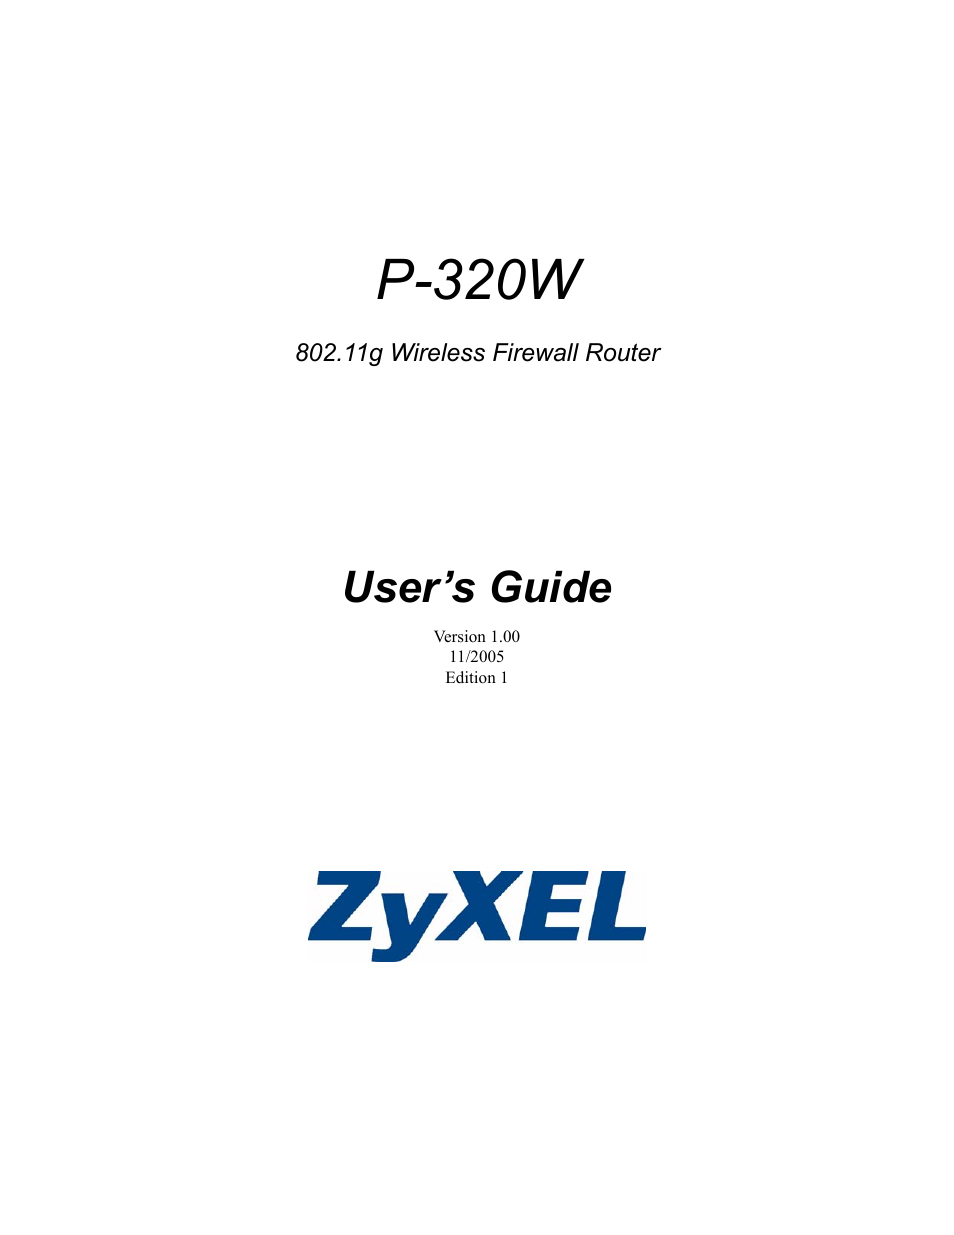 802.11g Wireless Firewall Router P-320W